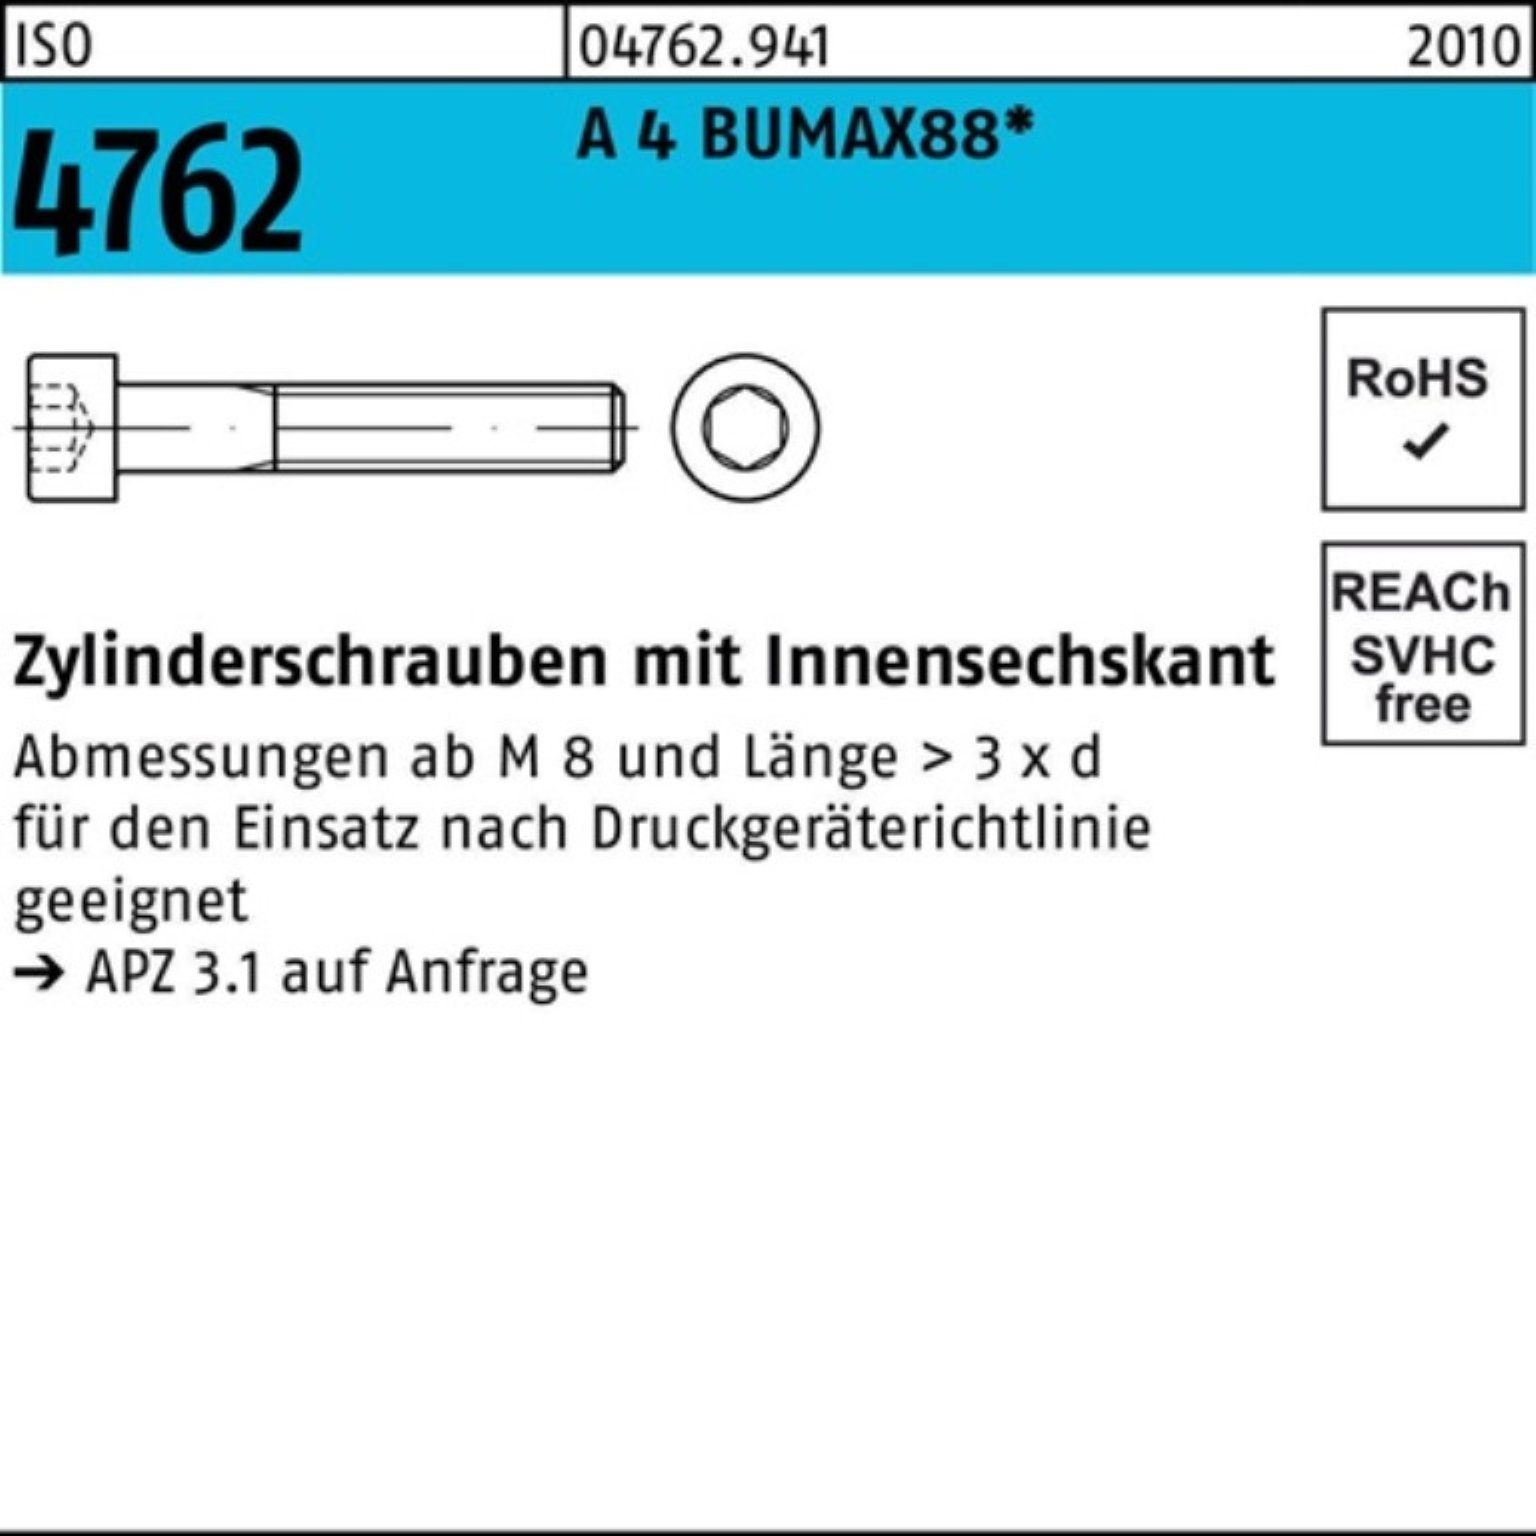 Bufab Zylinderschraube 100er Pack Zylinderschraube ISO 4762 Innen-6kt M6x 30 A 4 BUMAX88 100